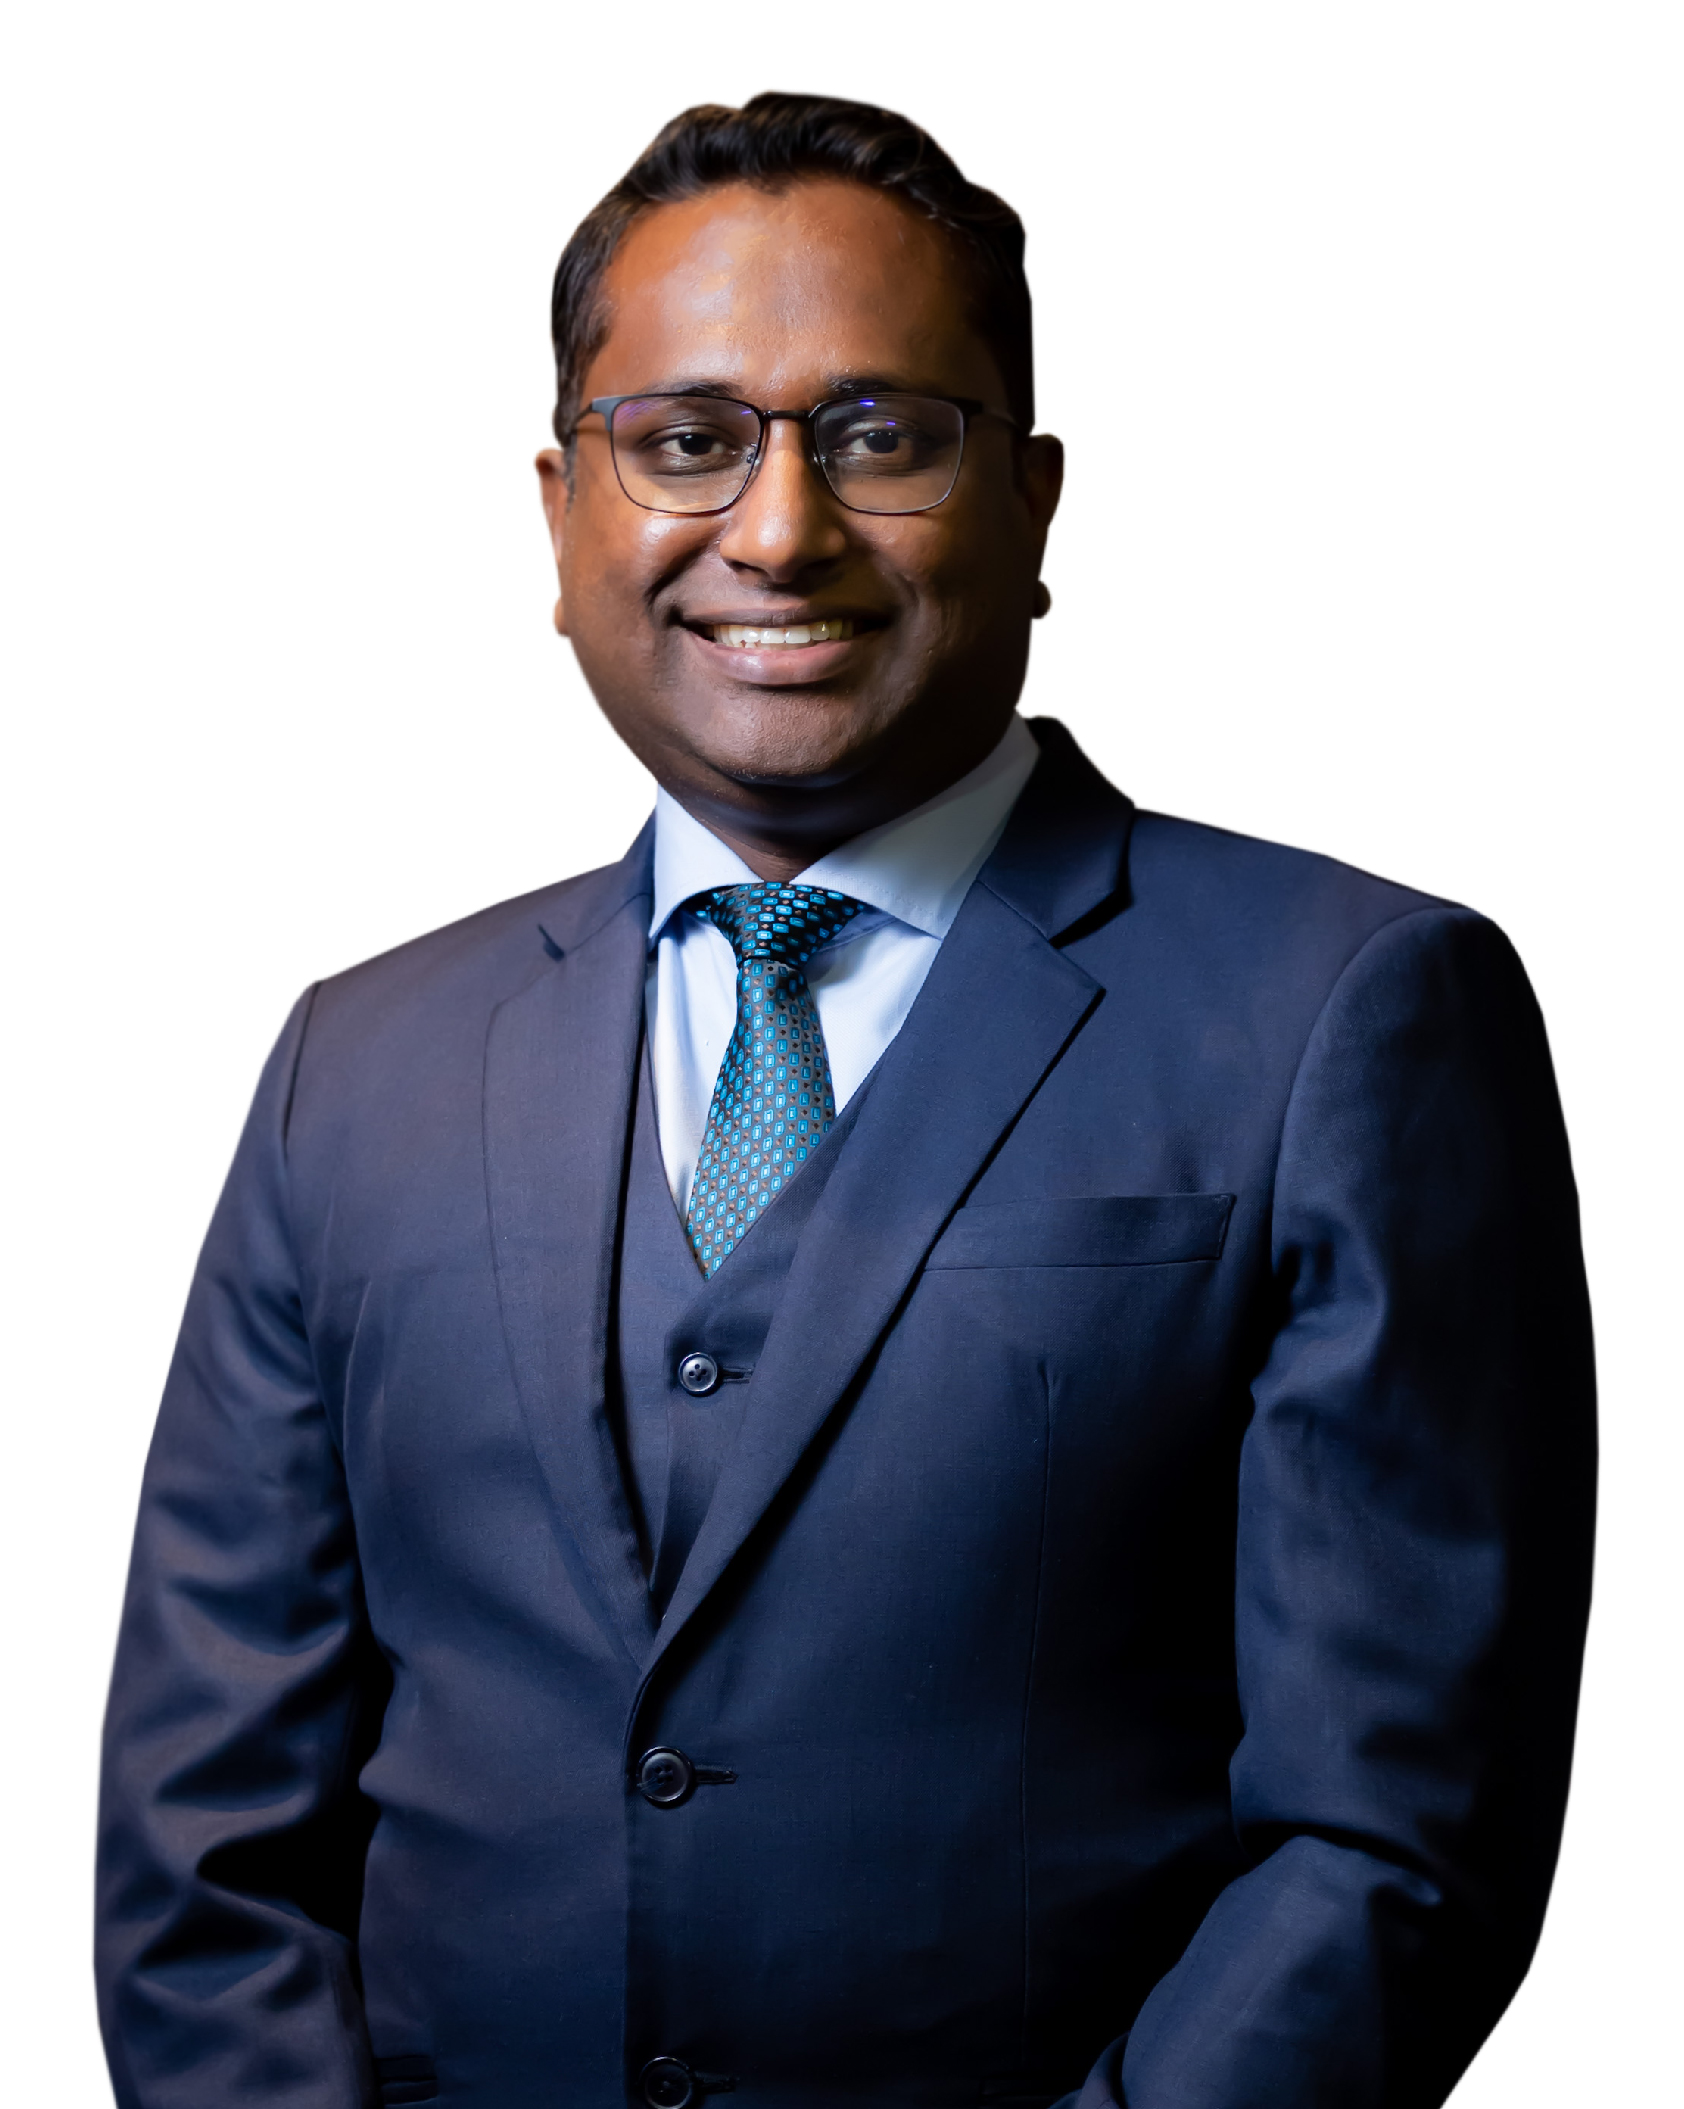 Dr. Chandran Nadarajan, an Interventional Radiology consultant in Gleneagles Hospital Kota Kinabalu